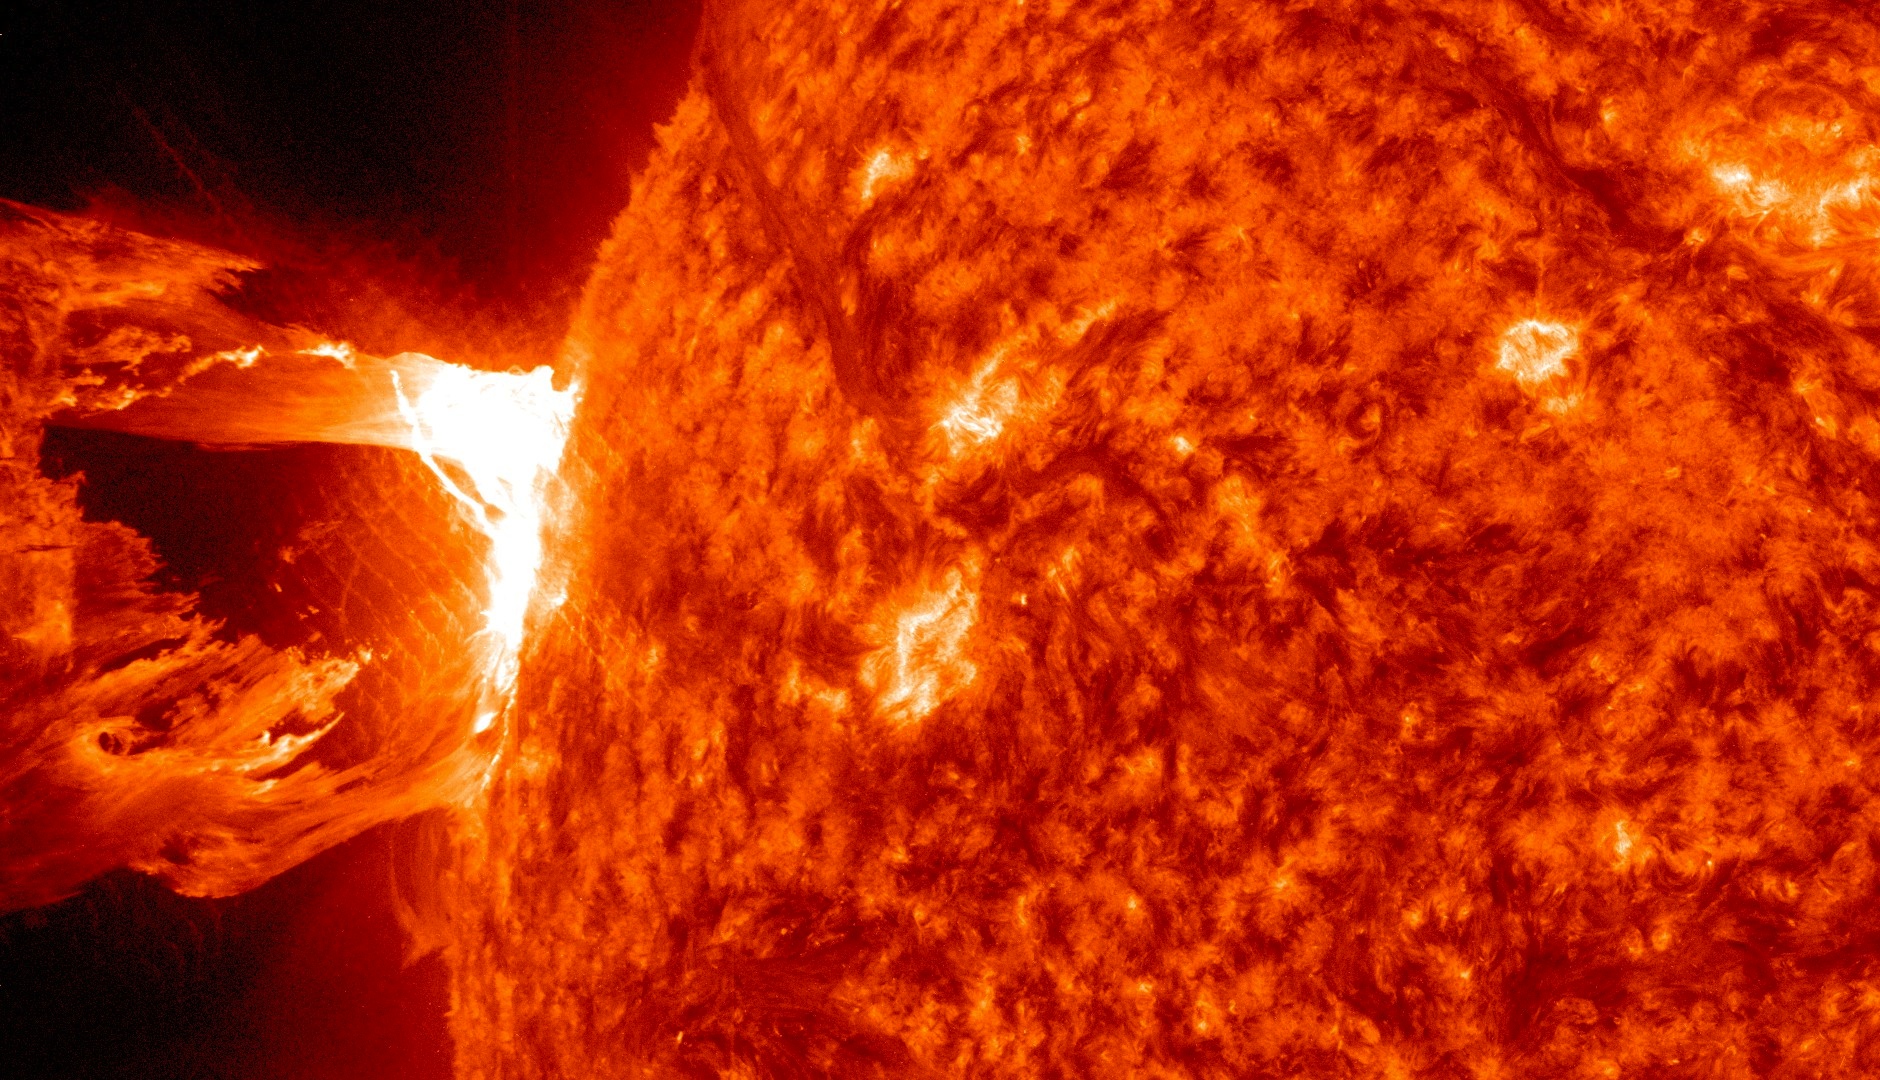 Solar storm image courtesy of NASA/SDO and the AIA, EVE, and HMI science teams.